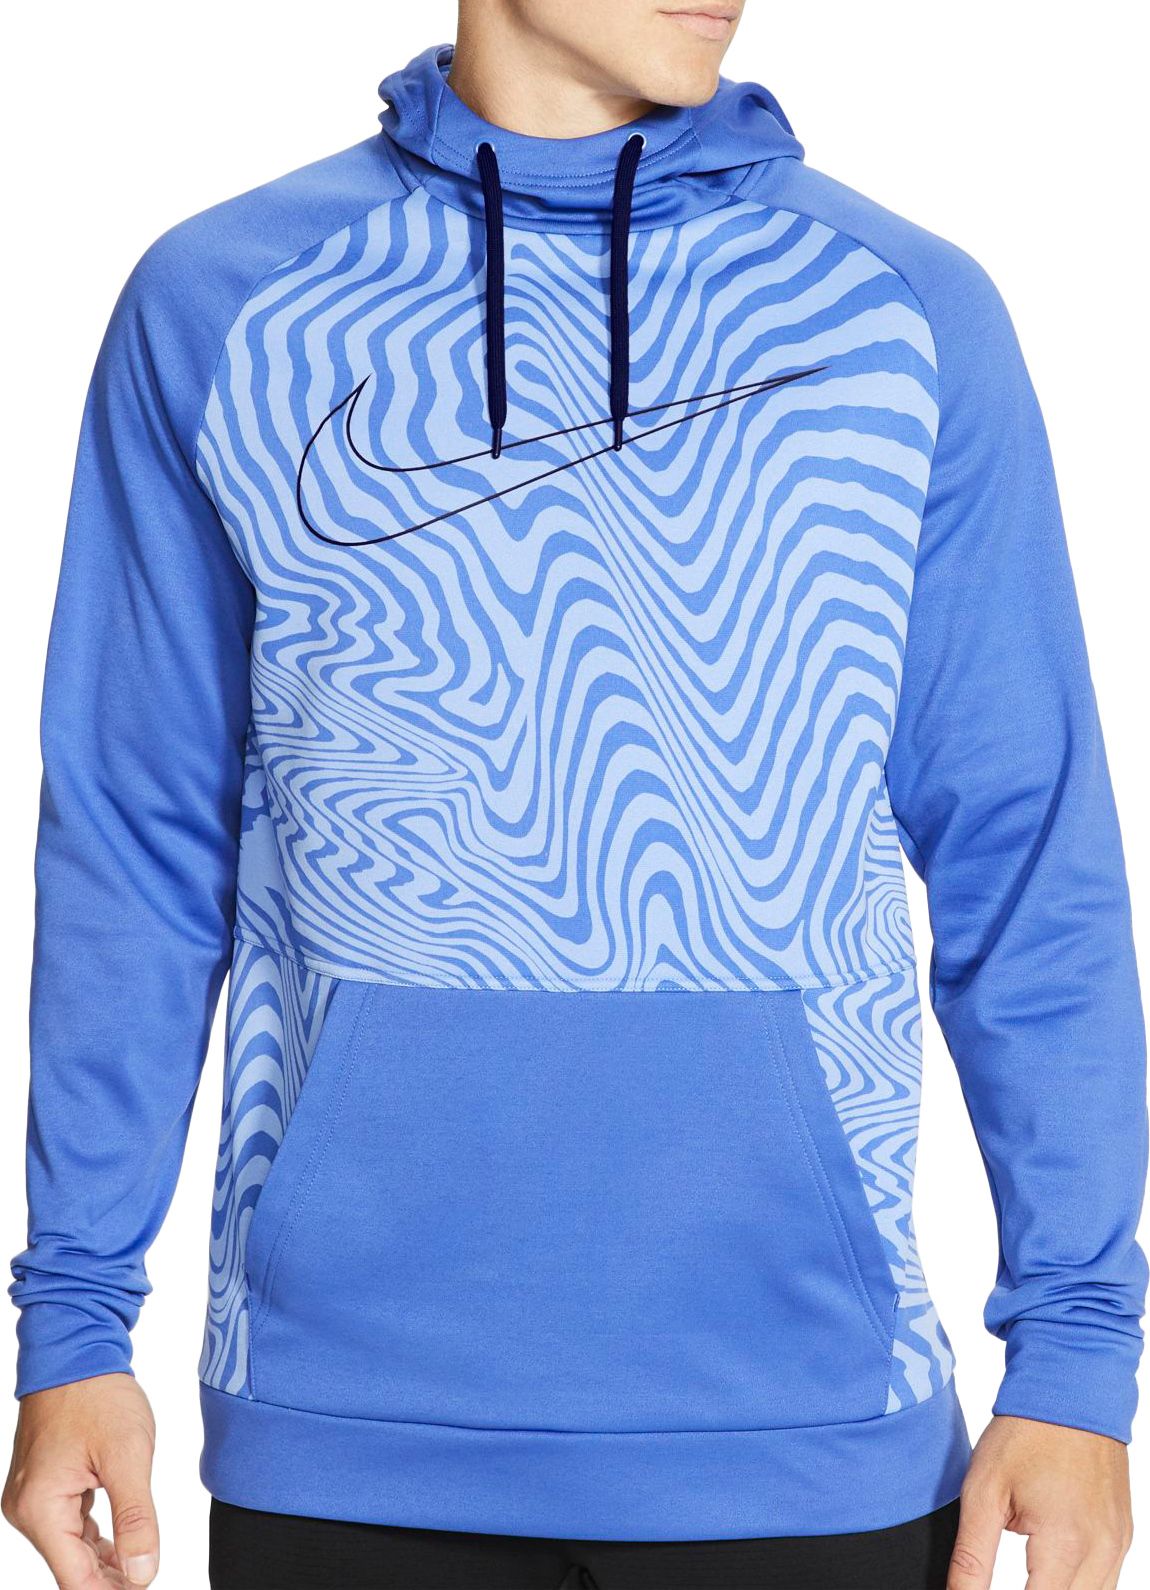 astronomy blue nike hoodie